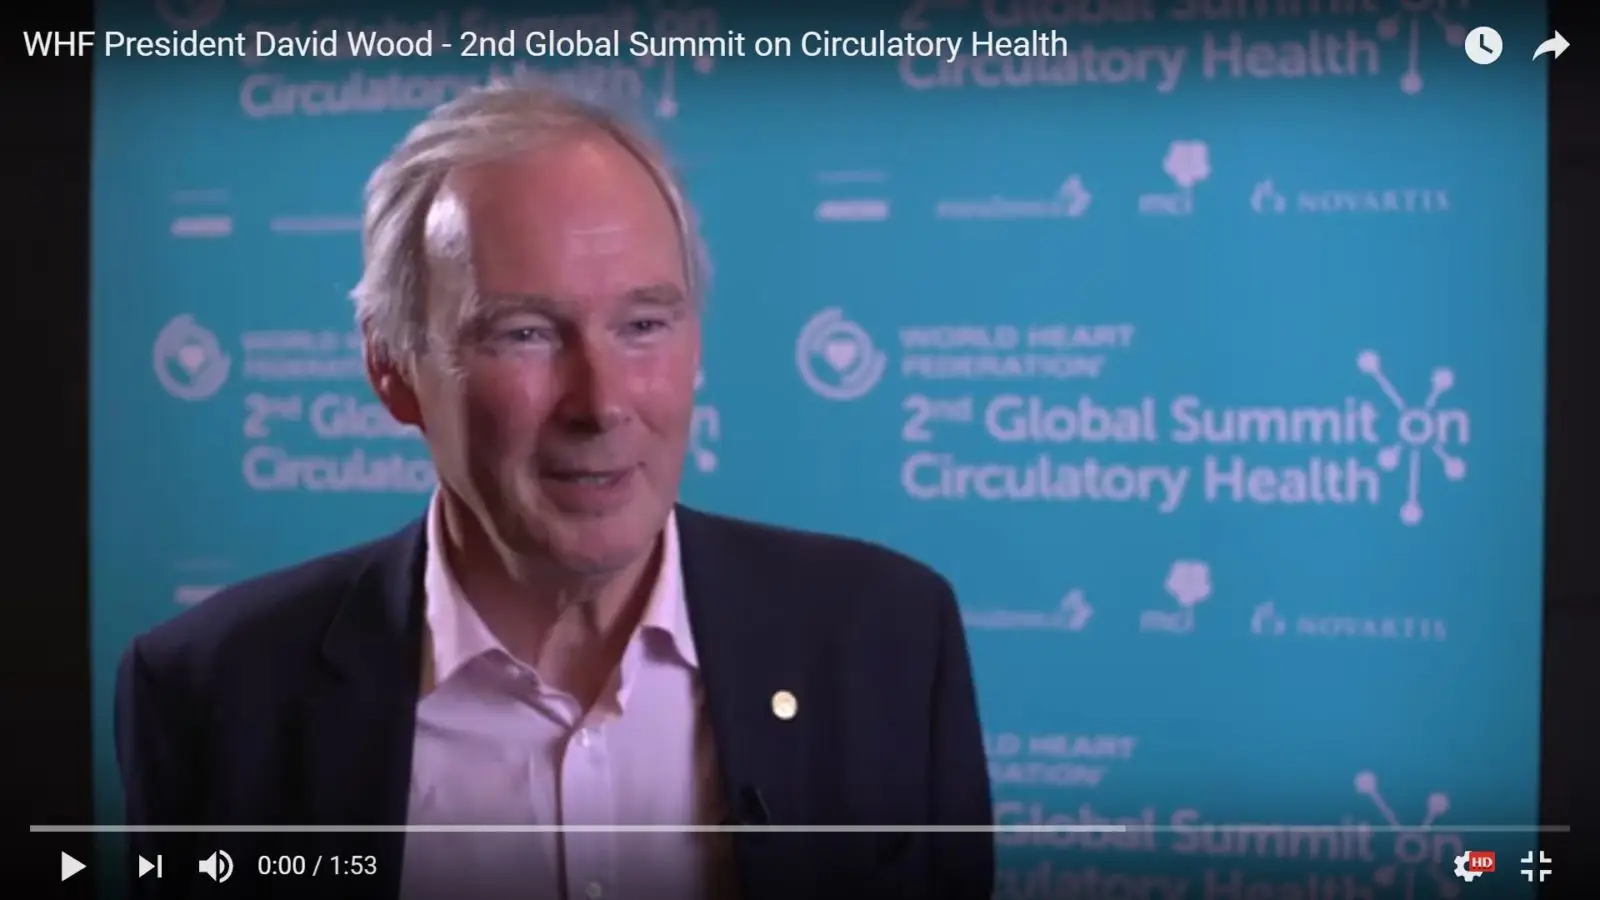 Screenshot of WHF President David Wood being interviewed at WHF's 2nd Global Summit on Circulatory Health